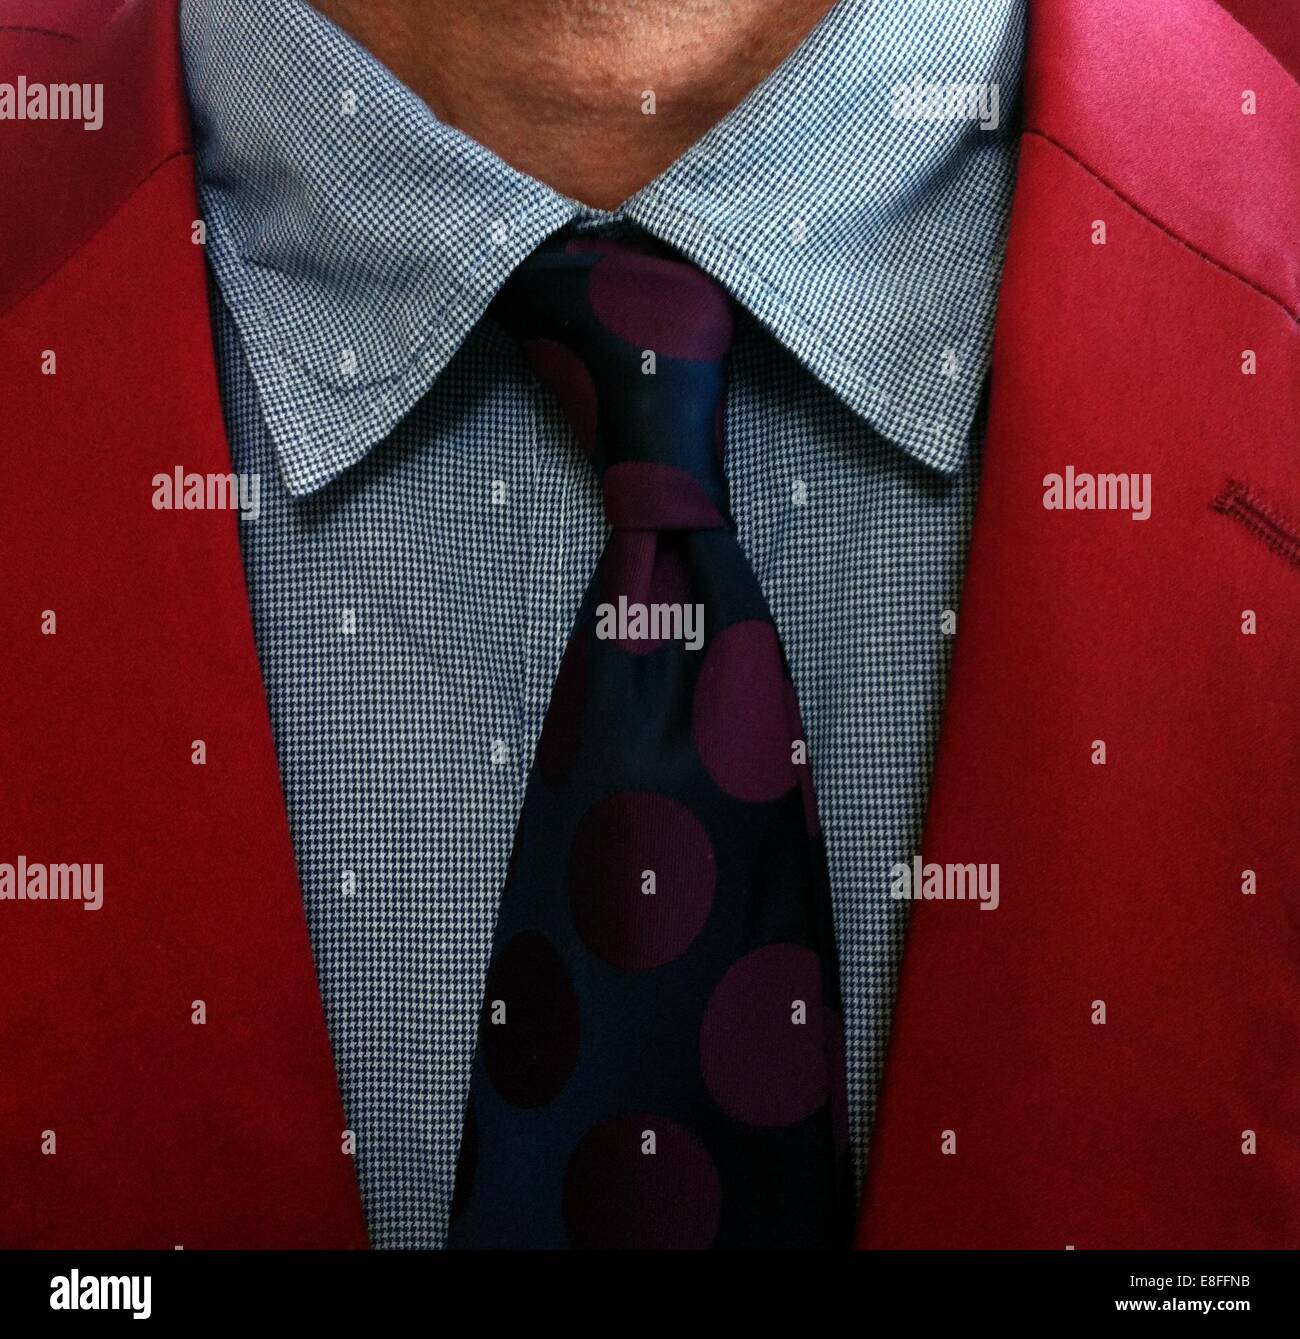 Close up of tie around a man's neck Stock Photo